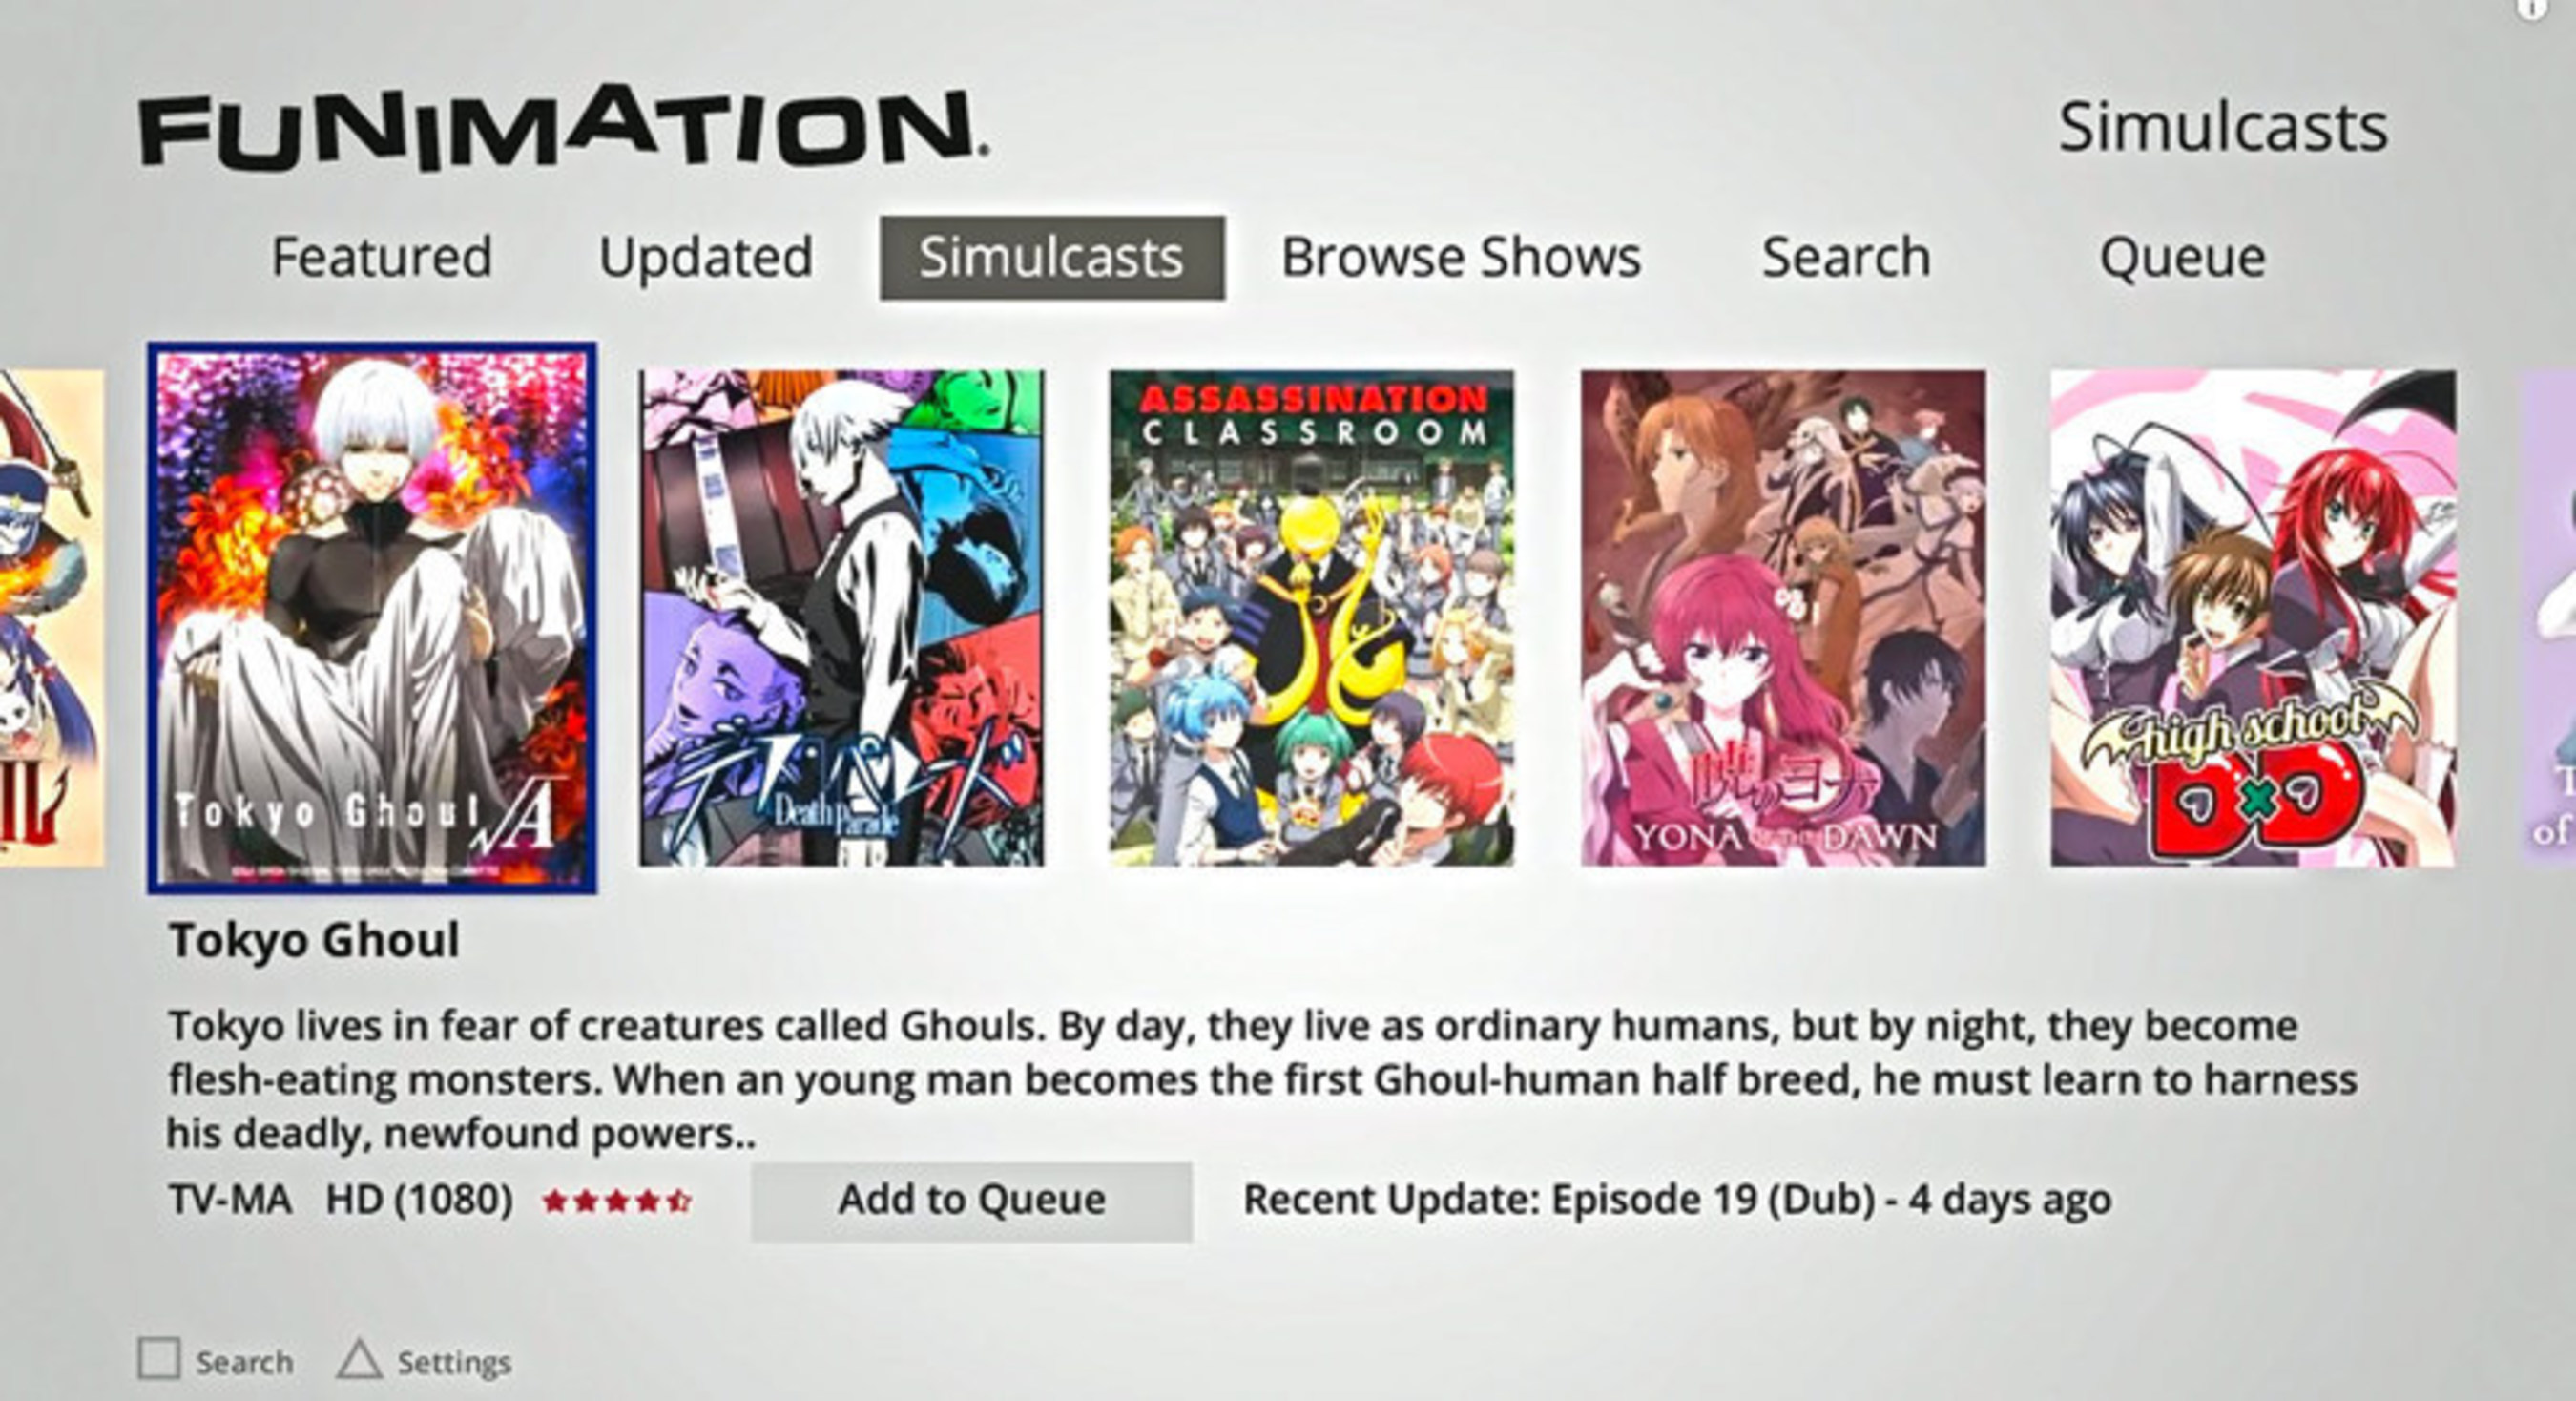 FUNimation PS4 App Screen Capture: Simulcast Menu.